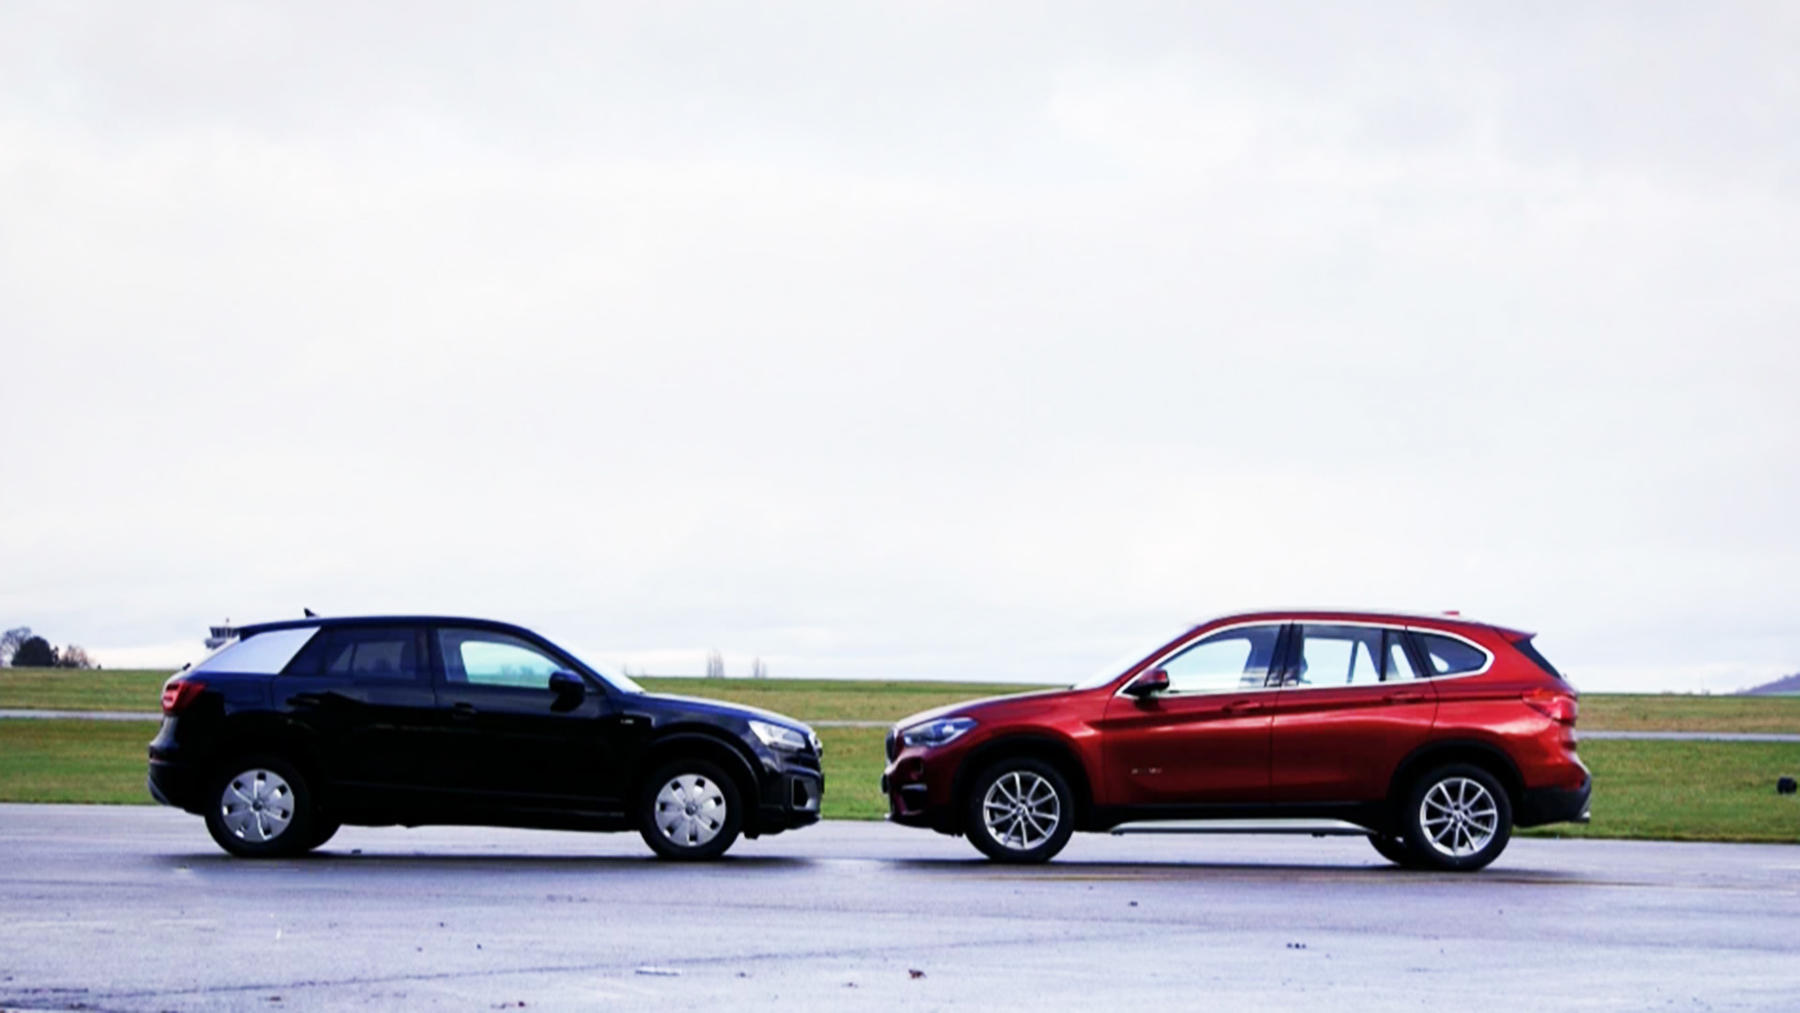 Thema u.a.: Vergleichstest Audi Q2 vs. BMW X1